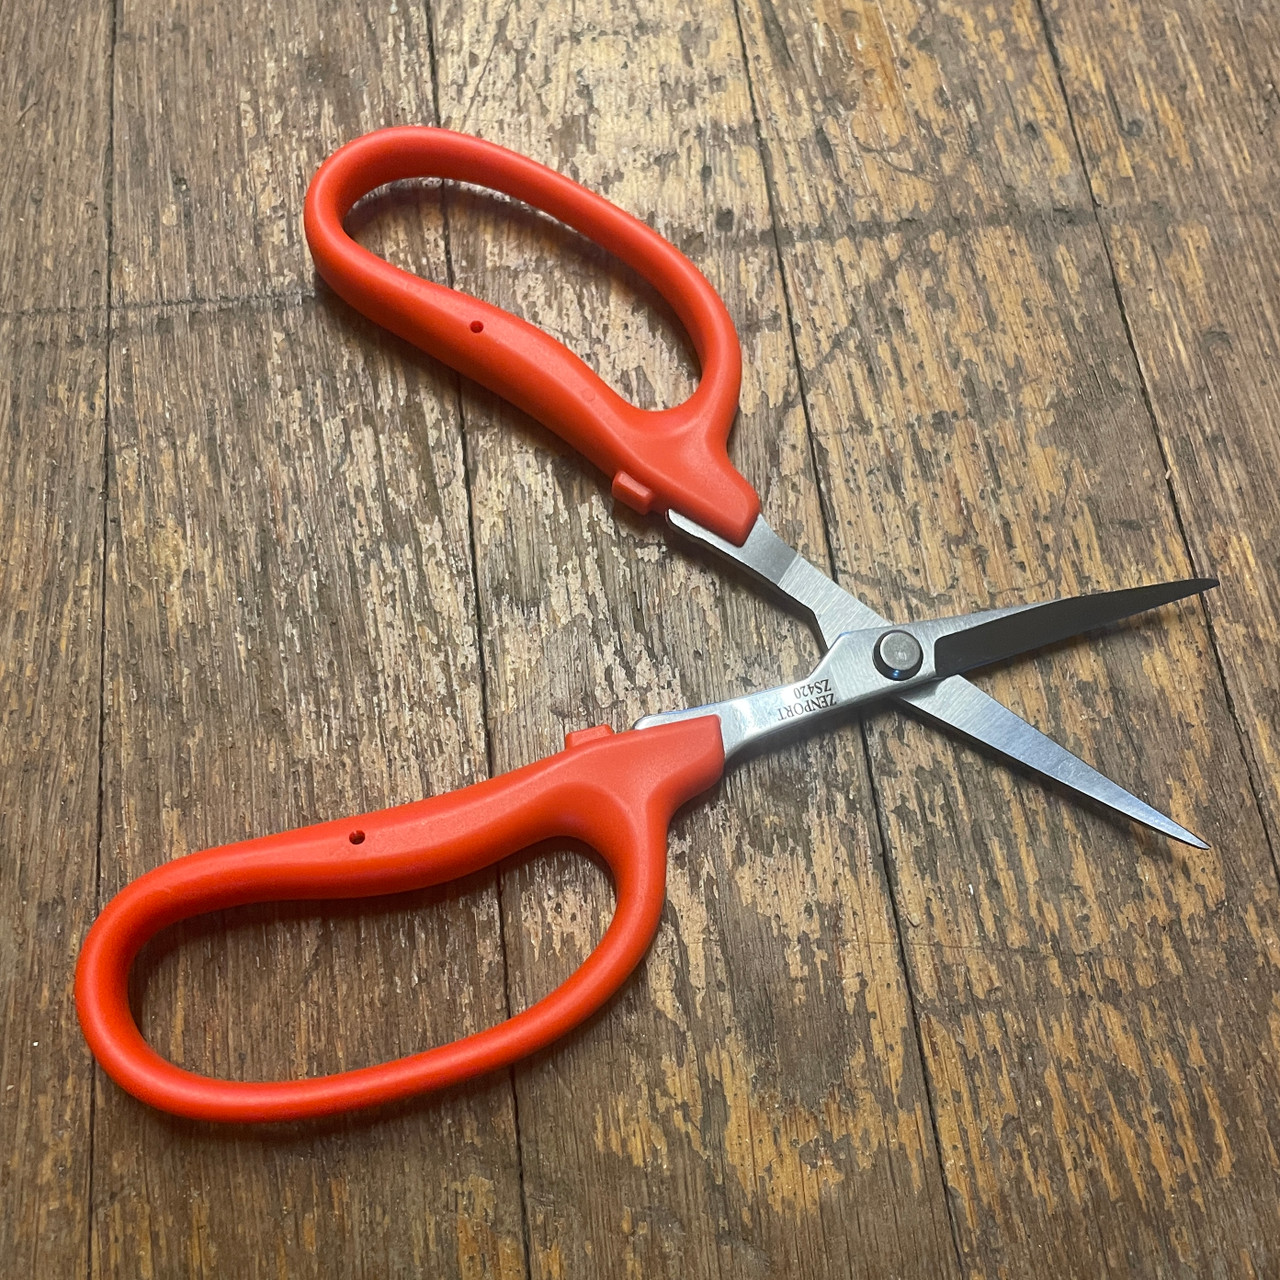 L-Shaped Blade Trimming Scissors